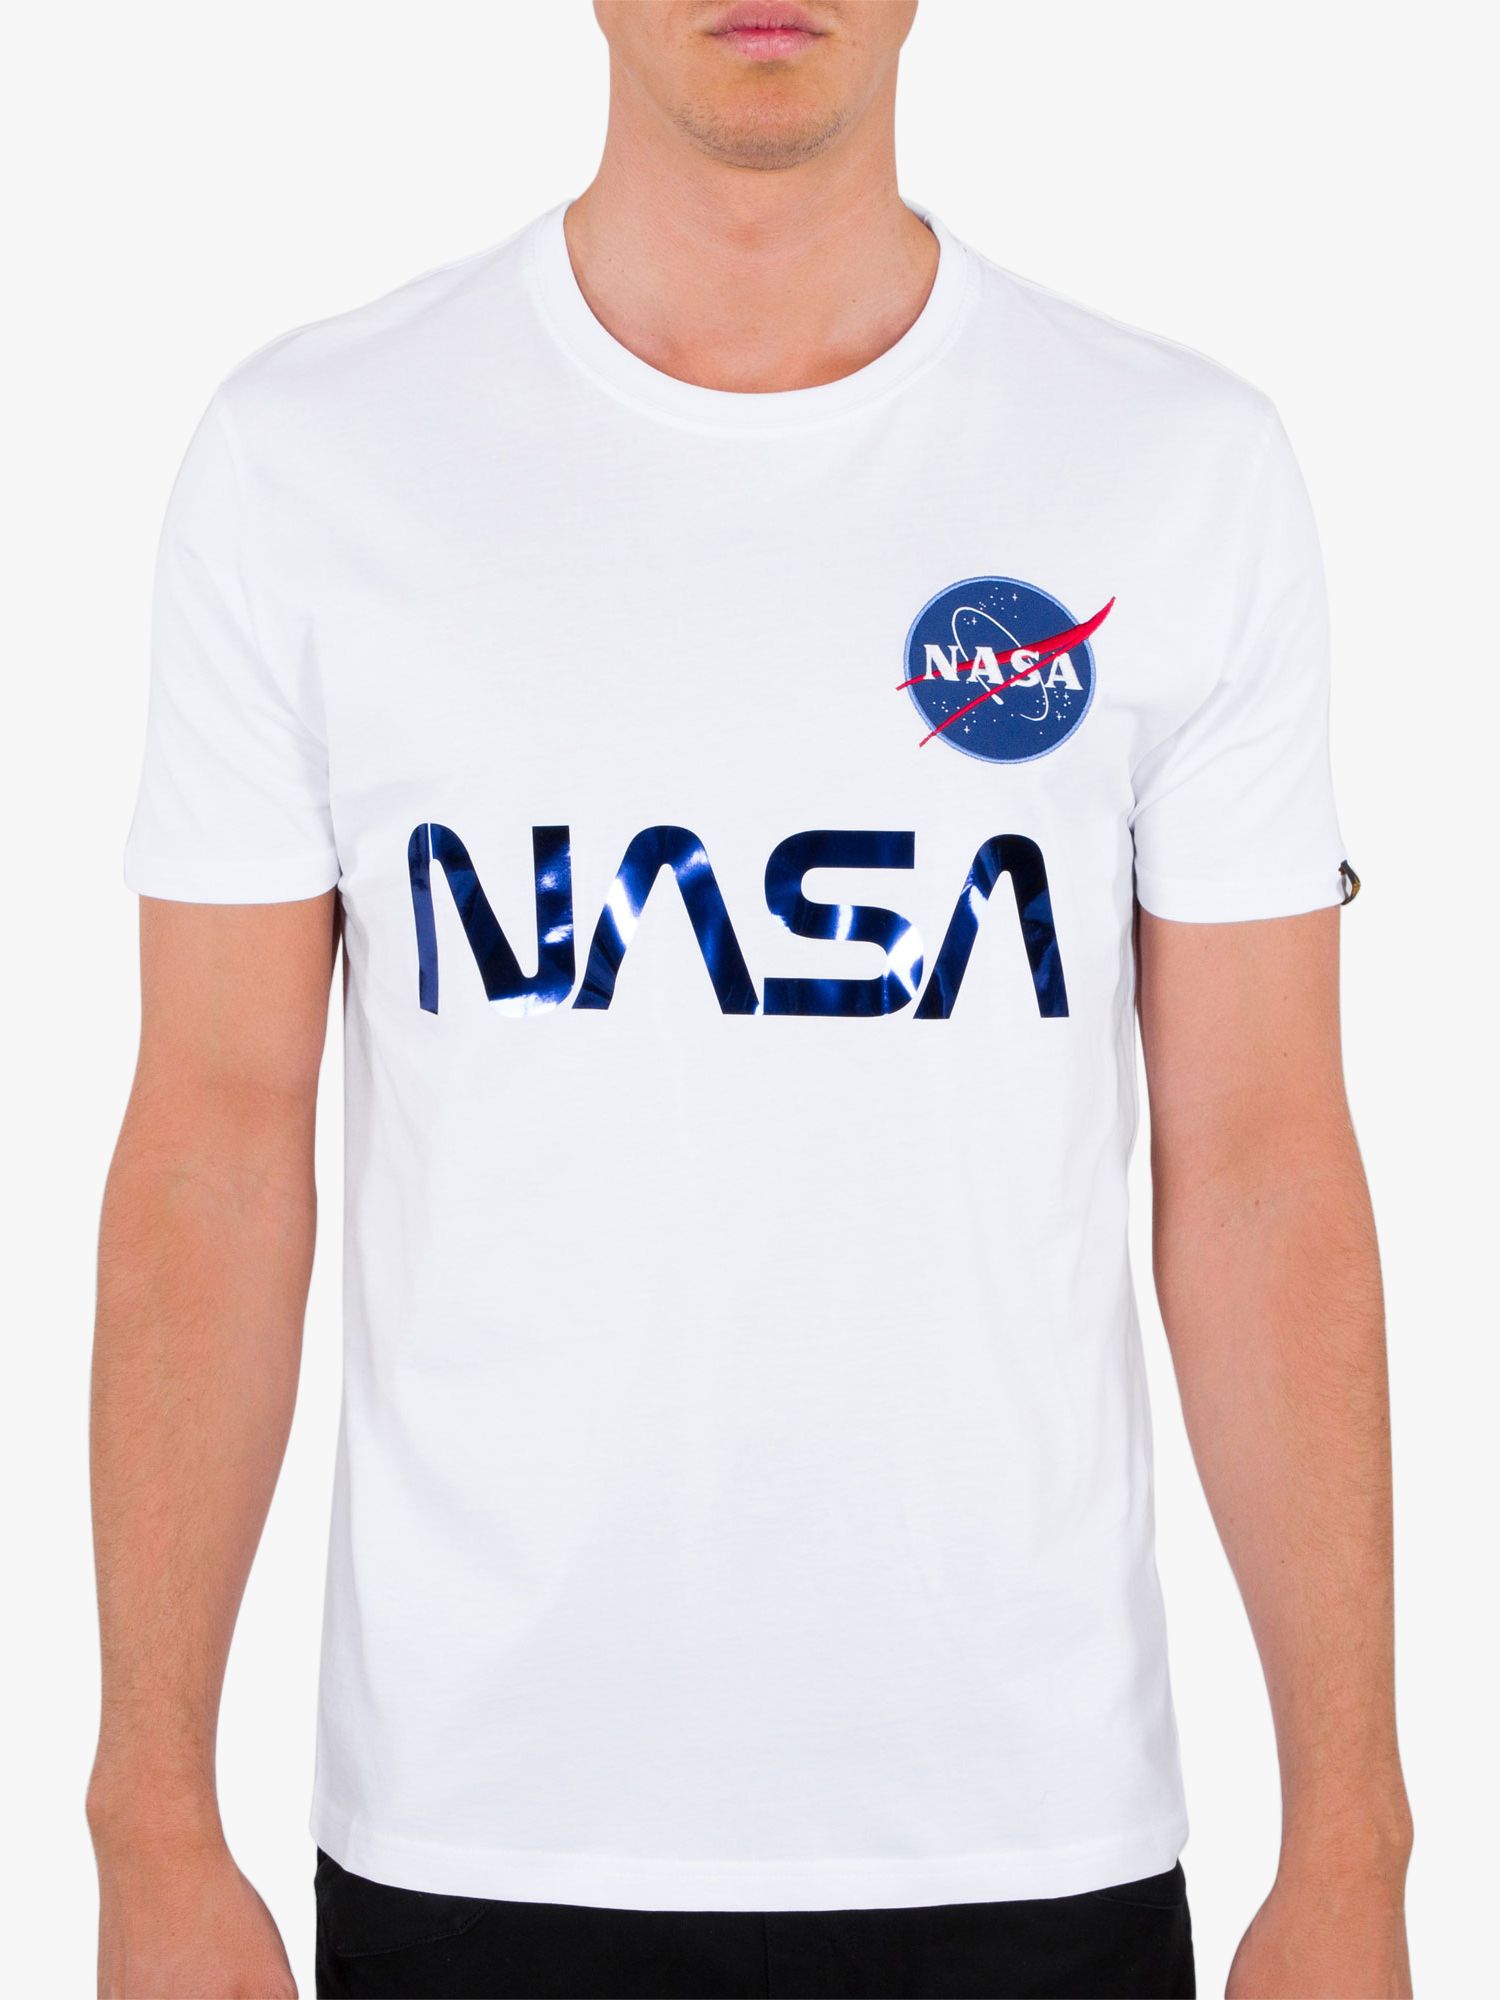 X Partners at Logo Lewis White/Blue Neck T-Shirt, Crew Industries John NASA Reflective & 90 Alpha